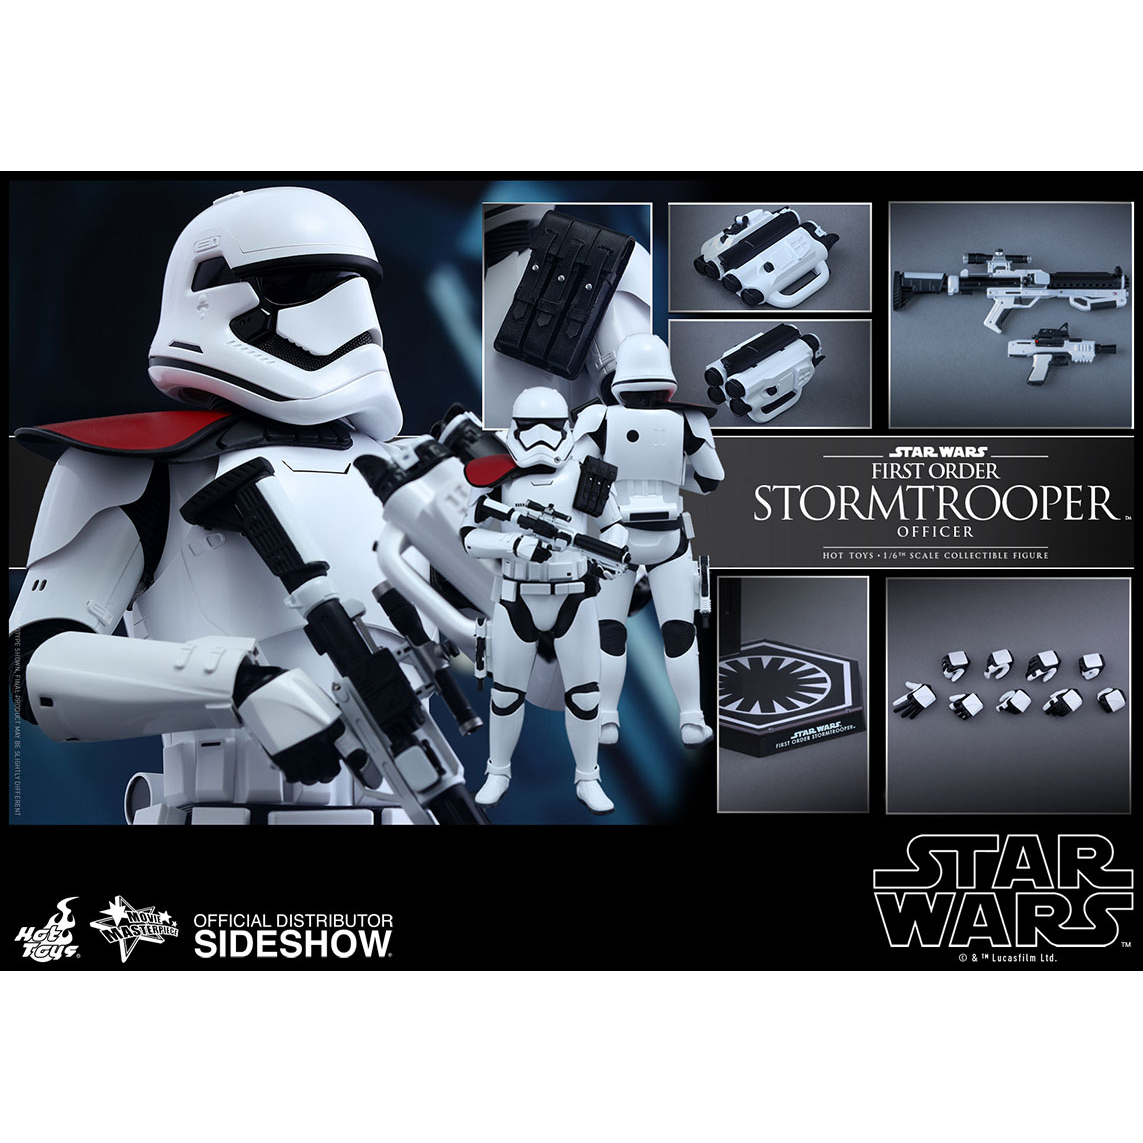 Star Wars: The Force Awakens First Order Stormtrooper Officer